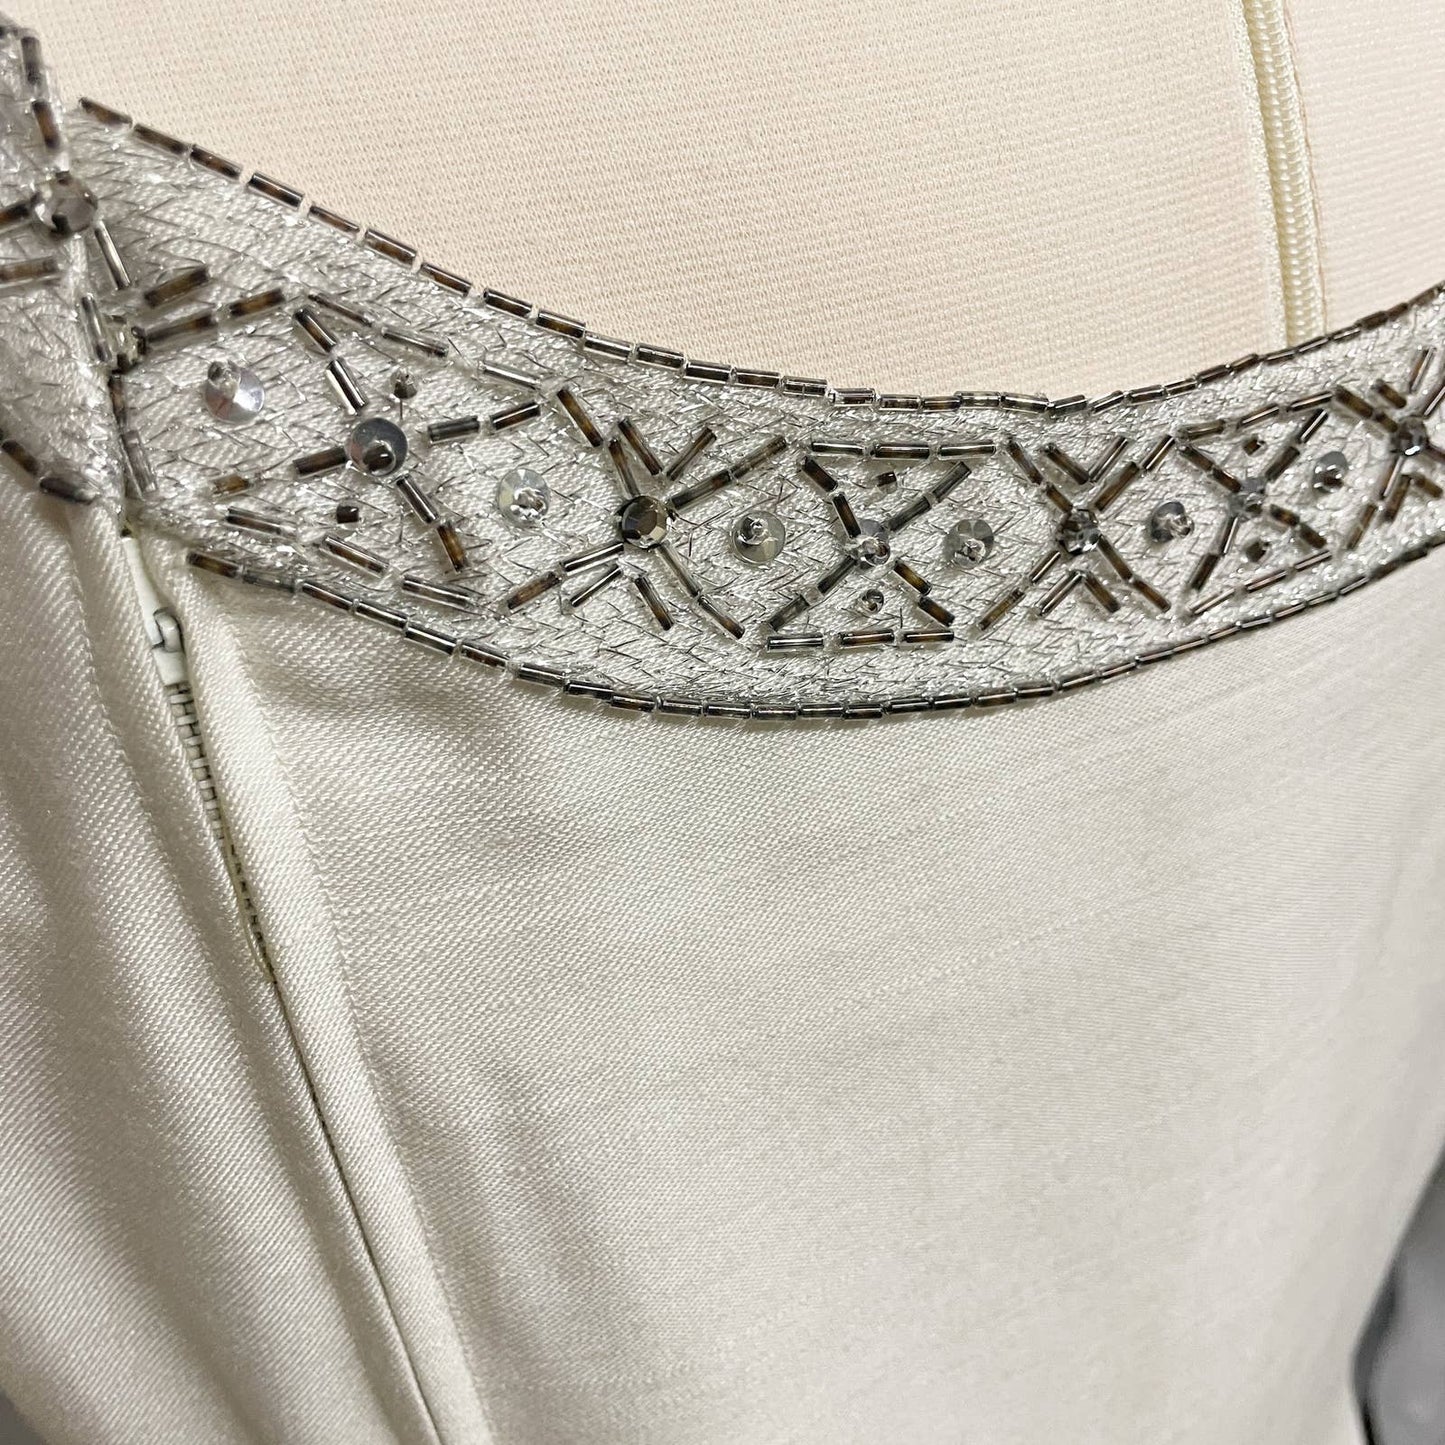 Vintage R & K Originals 1960s Dress Ivory Beaded Collar Knee Length M/L a1004